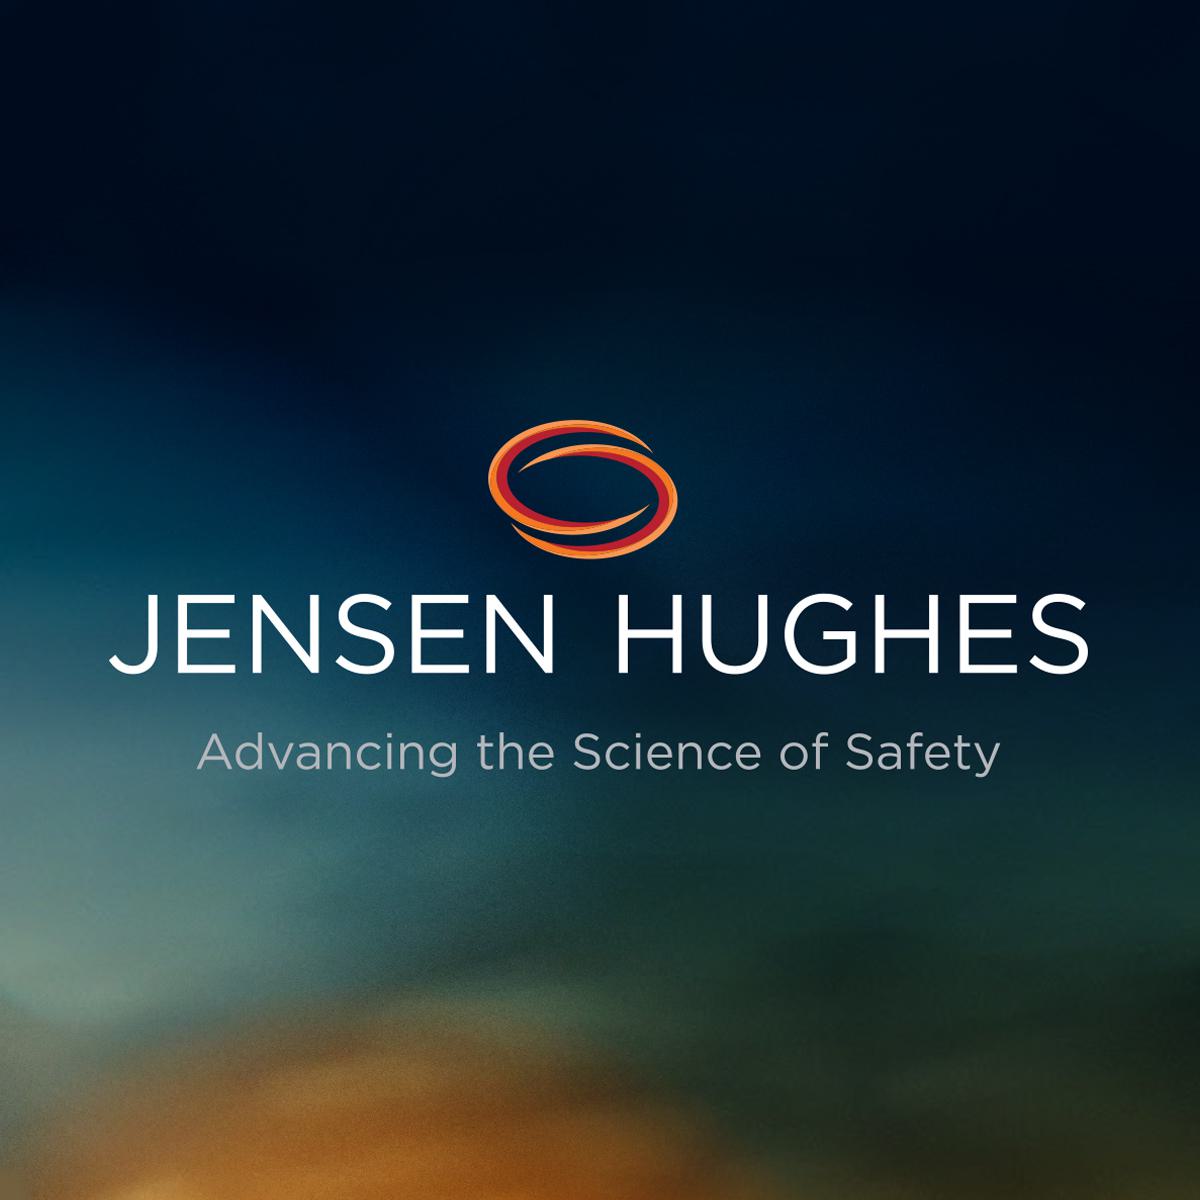 Jensen Hughes Case Study Image